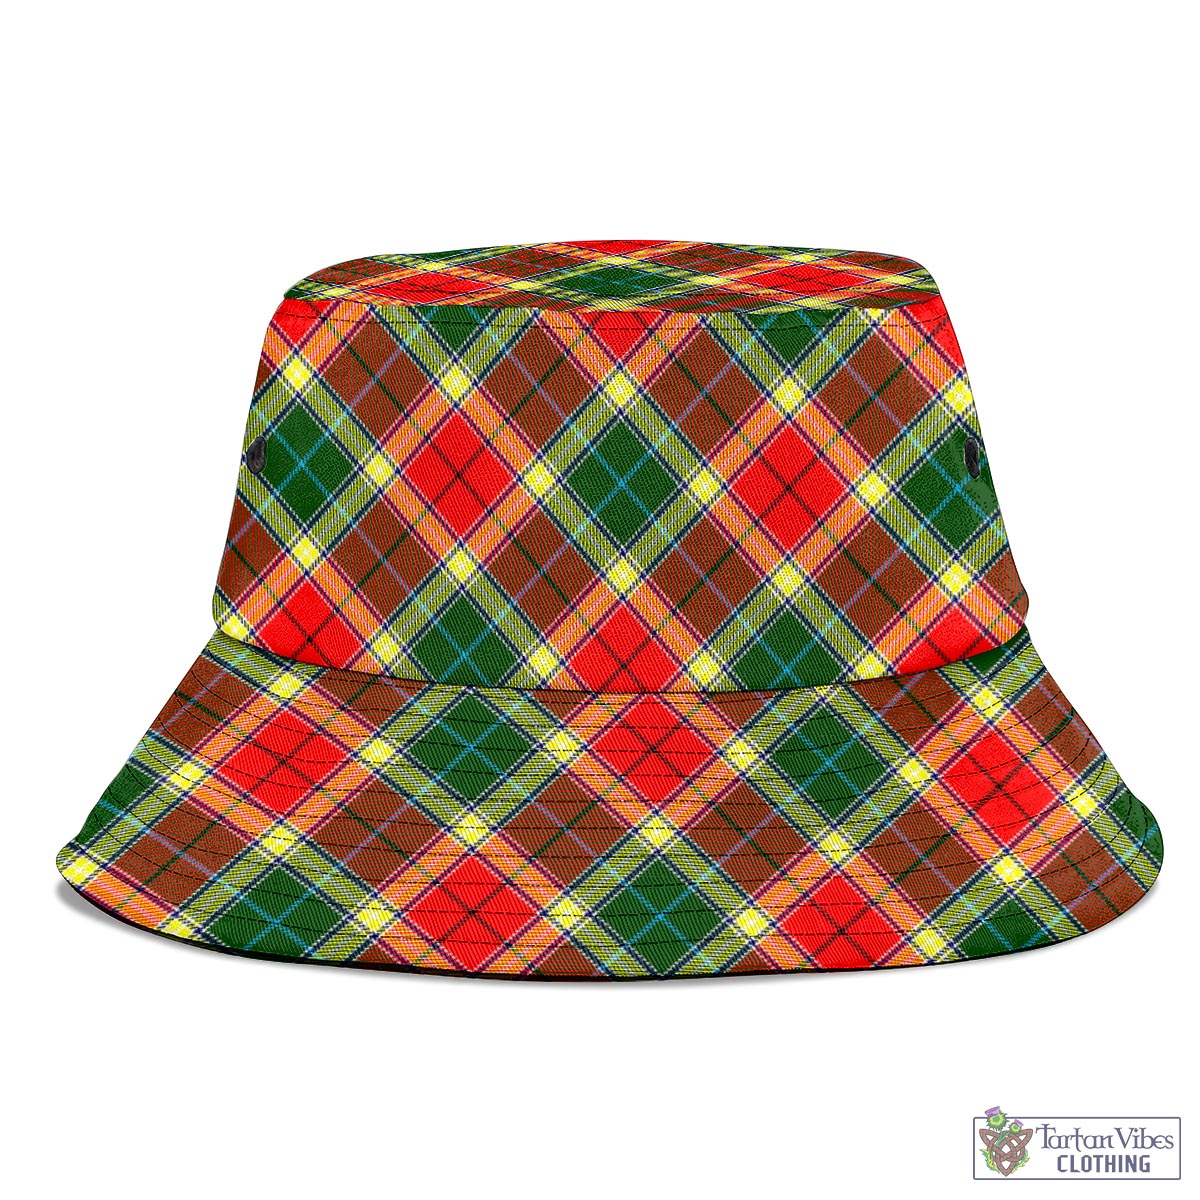 Tartan Vibes Clothing Gibsone (Gibson-Gibbs) Tartan Bucket Hat